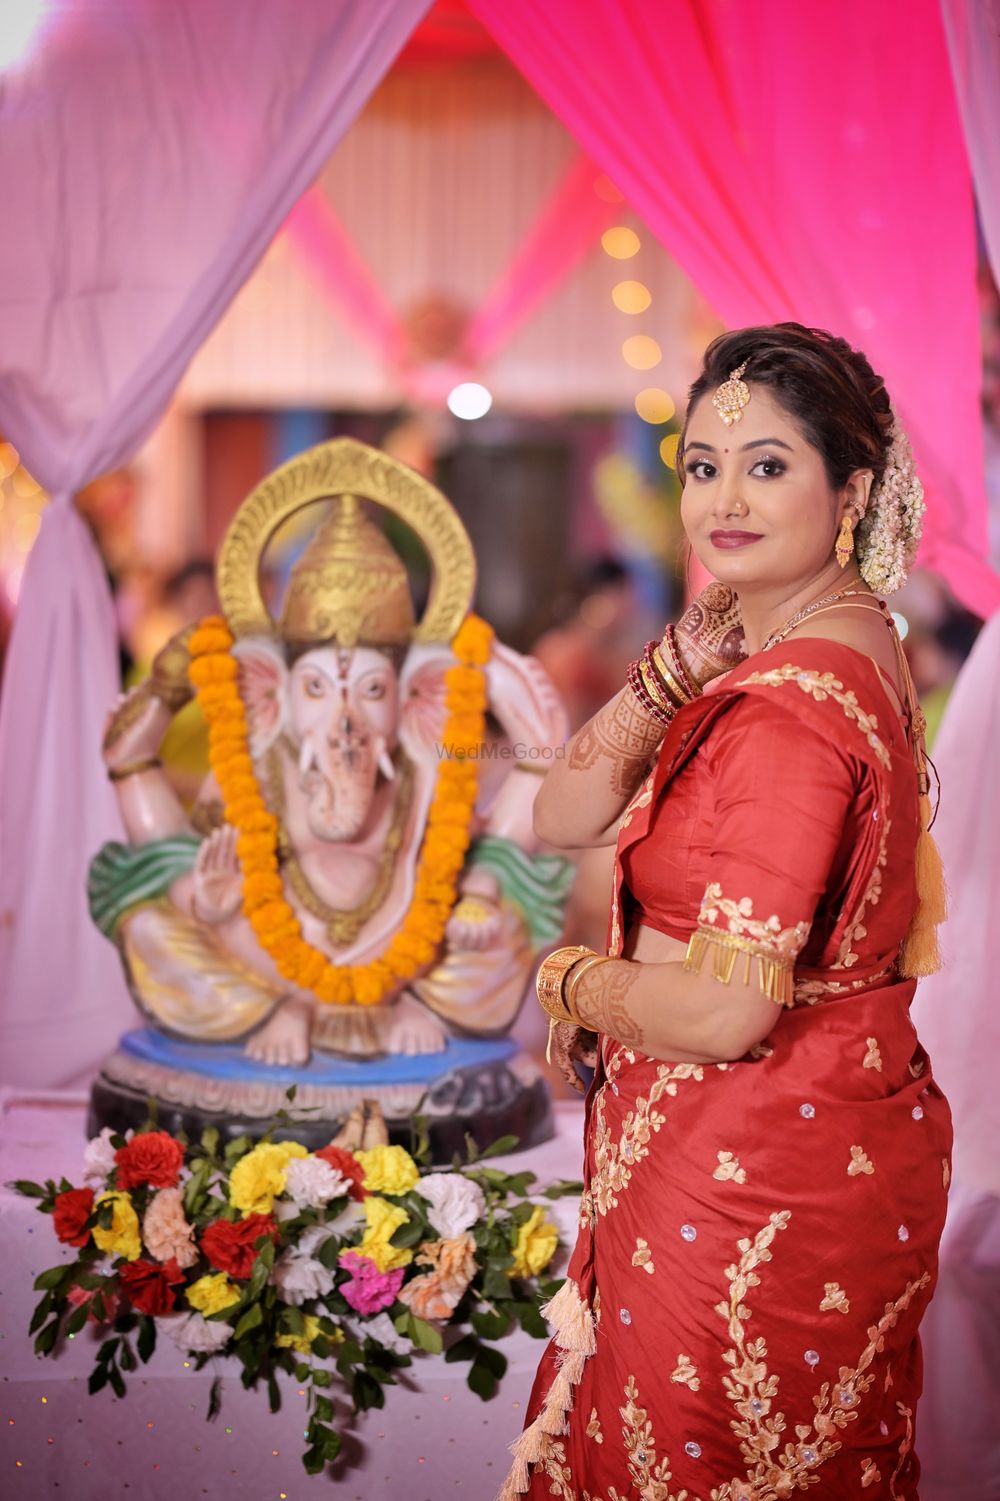 Photo From wedding Ceremony of Ankita Sarma - By Subhmangala